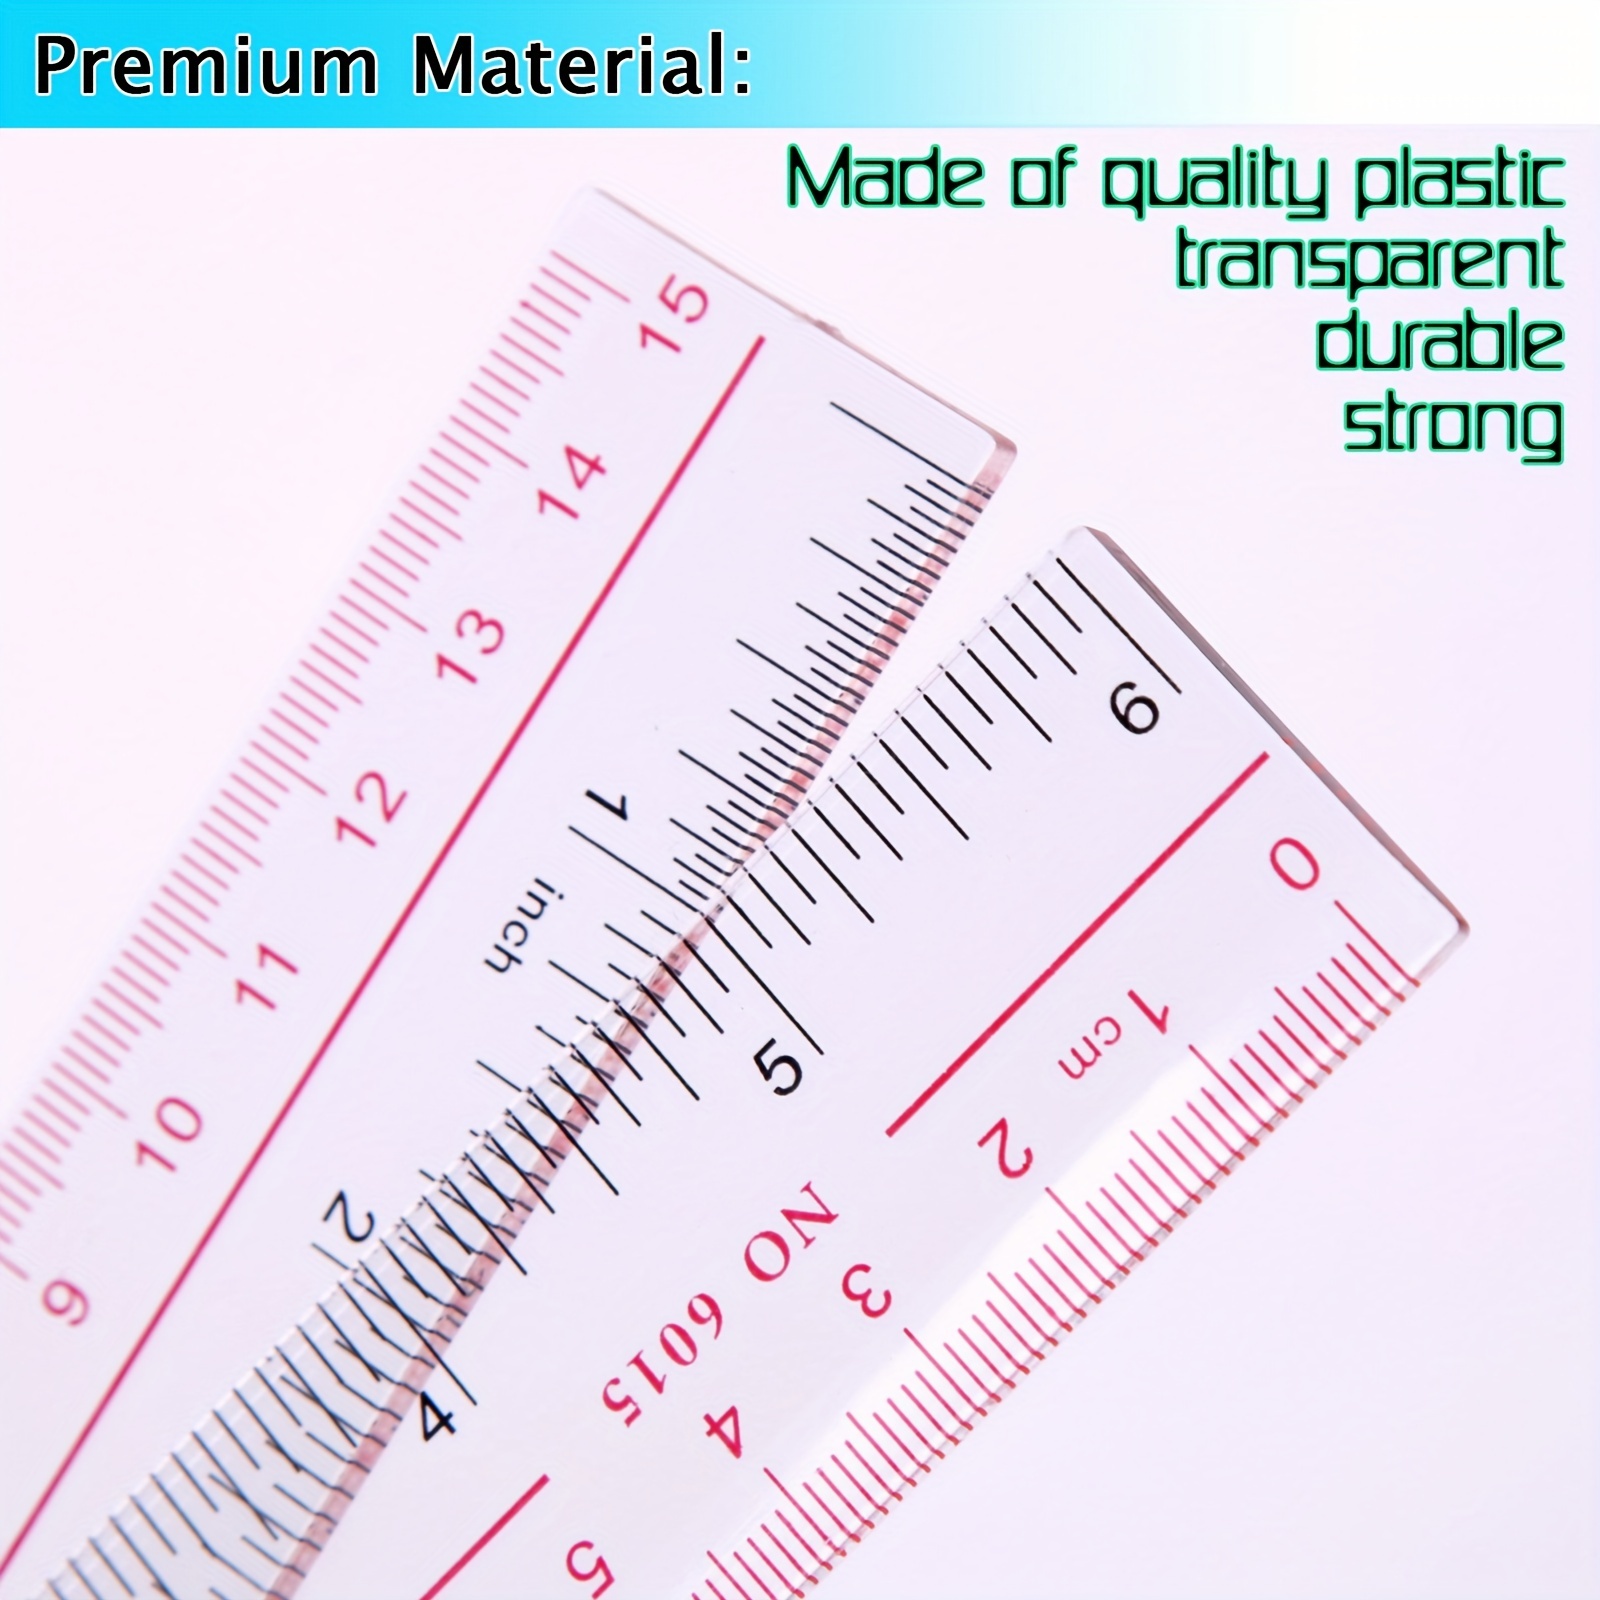 15cm/20cm/30cm Plastic Ruler Portable Mathematics Ruler For